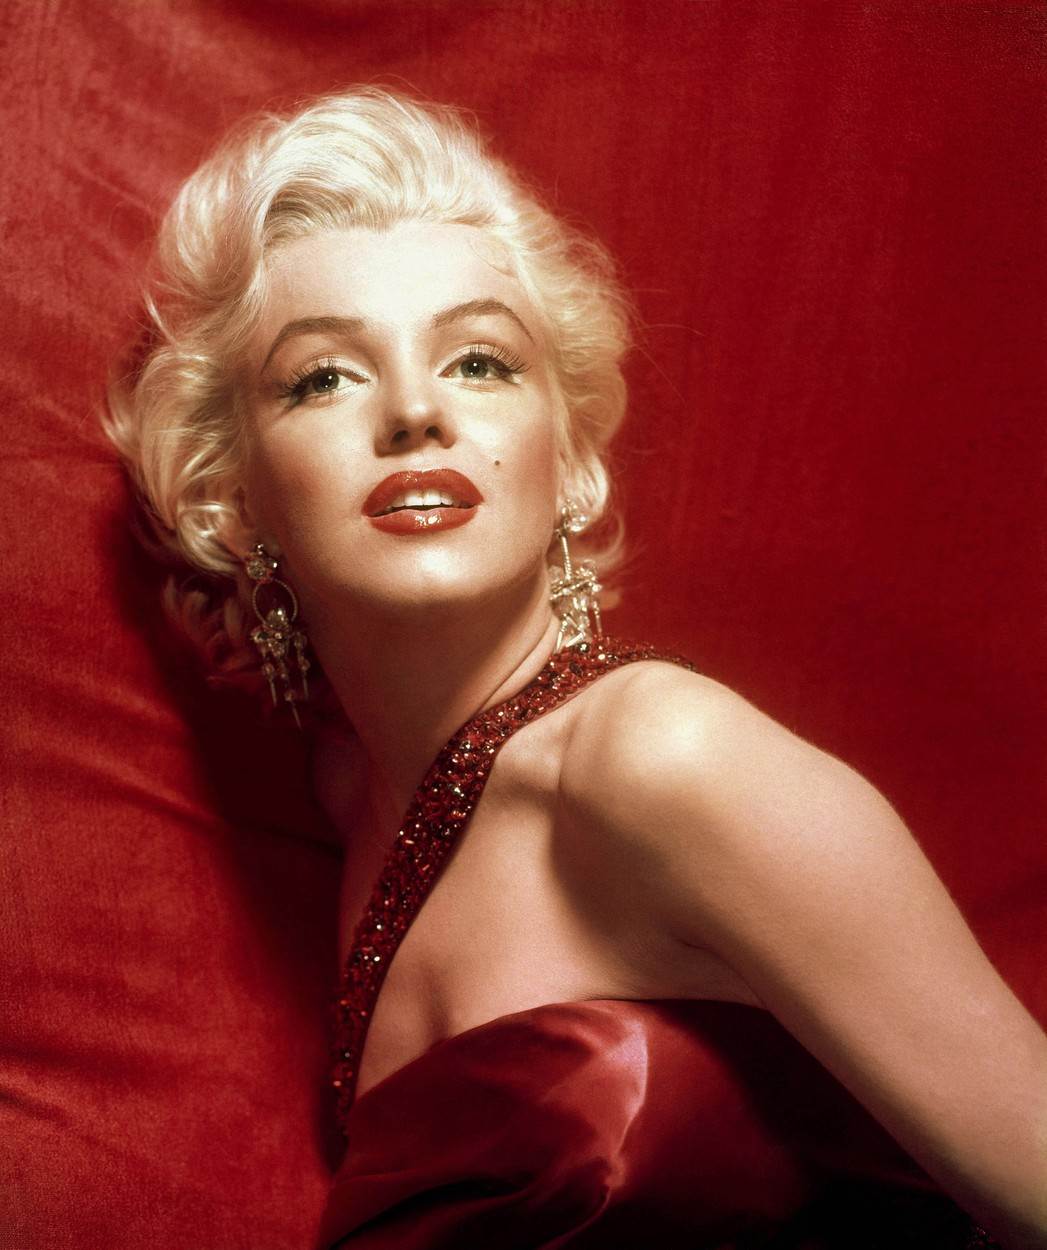 Marilyn je bila i ostala seks simbol show businessa.